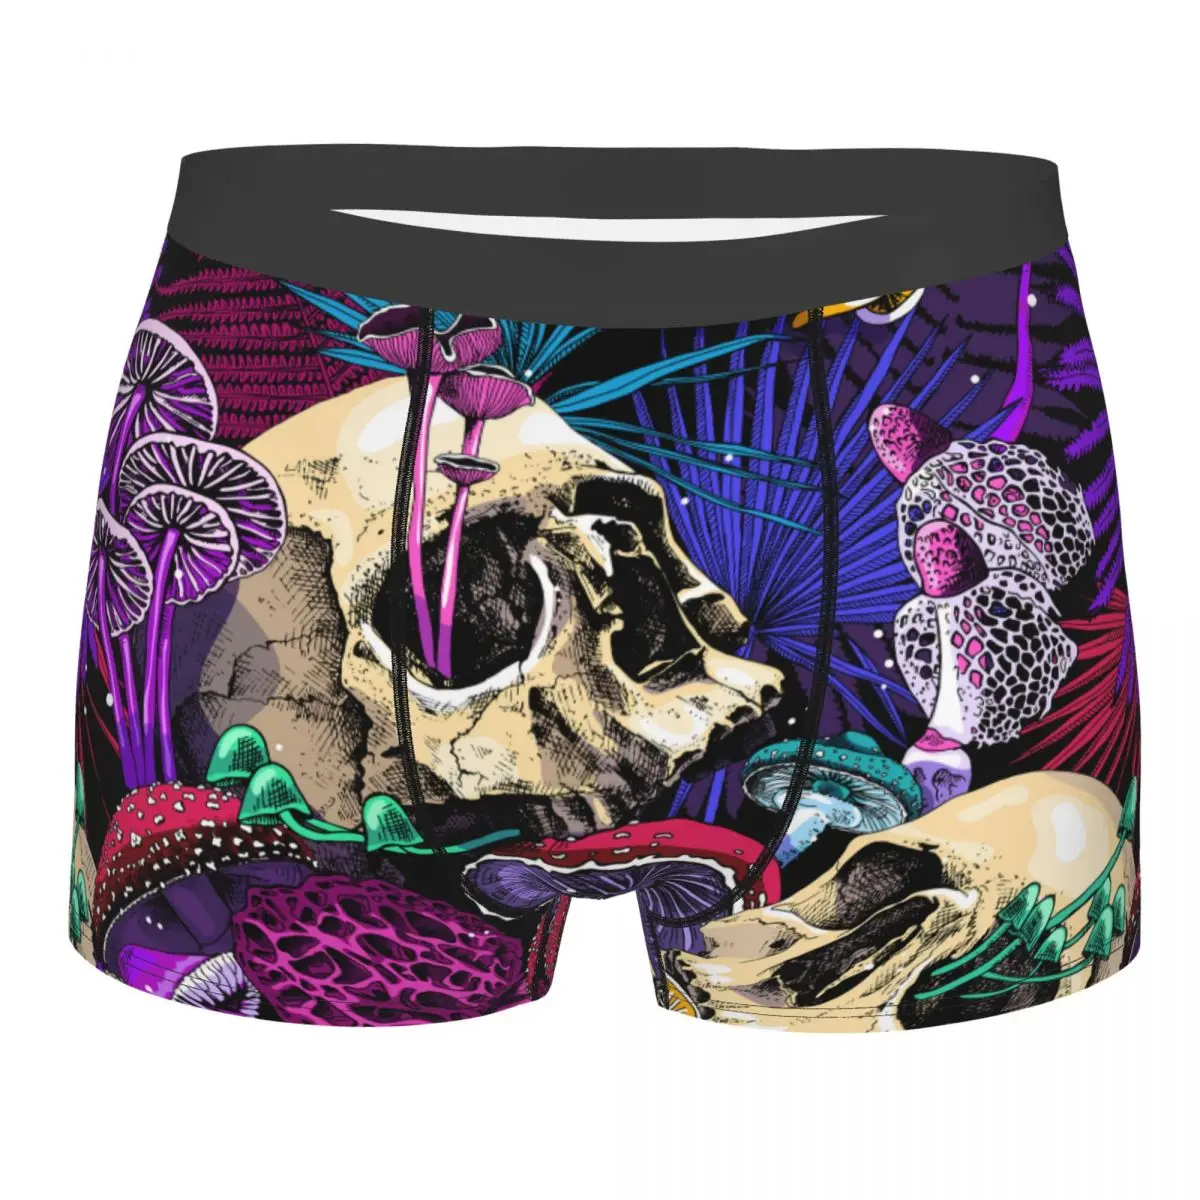 

Boxershorts Men Comforable Panties Set Skeletons And Colored Mushrooms Underwear Man Boxer Lingerie